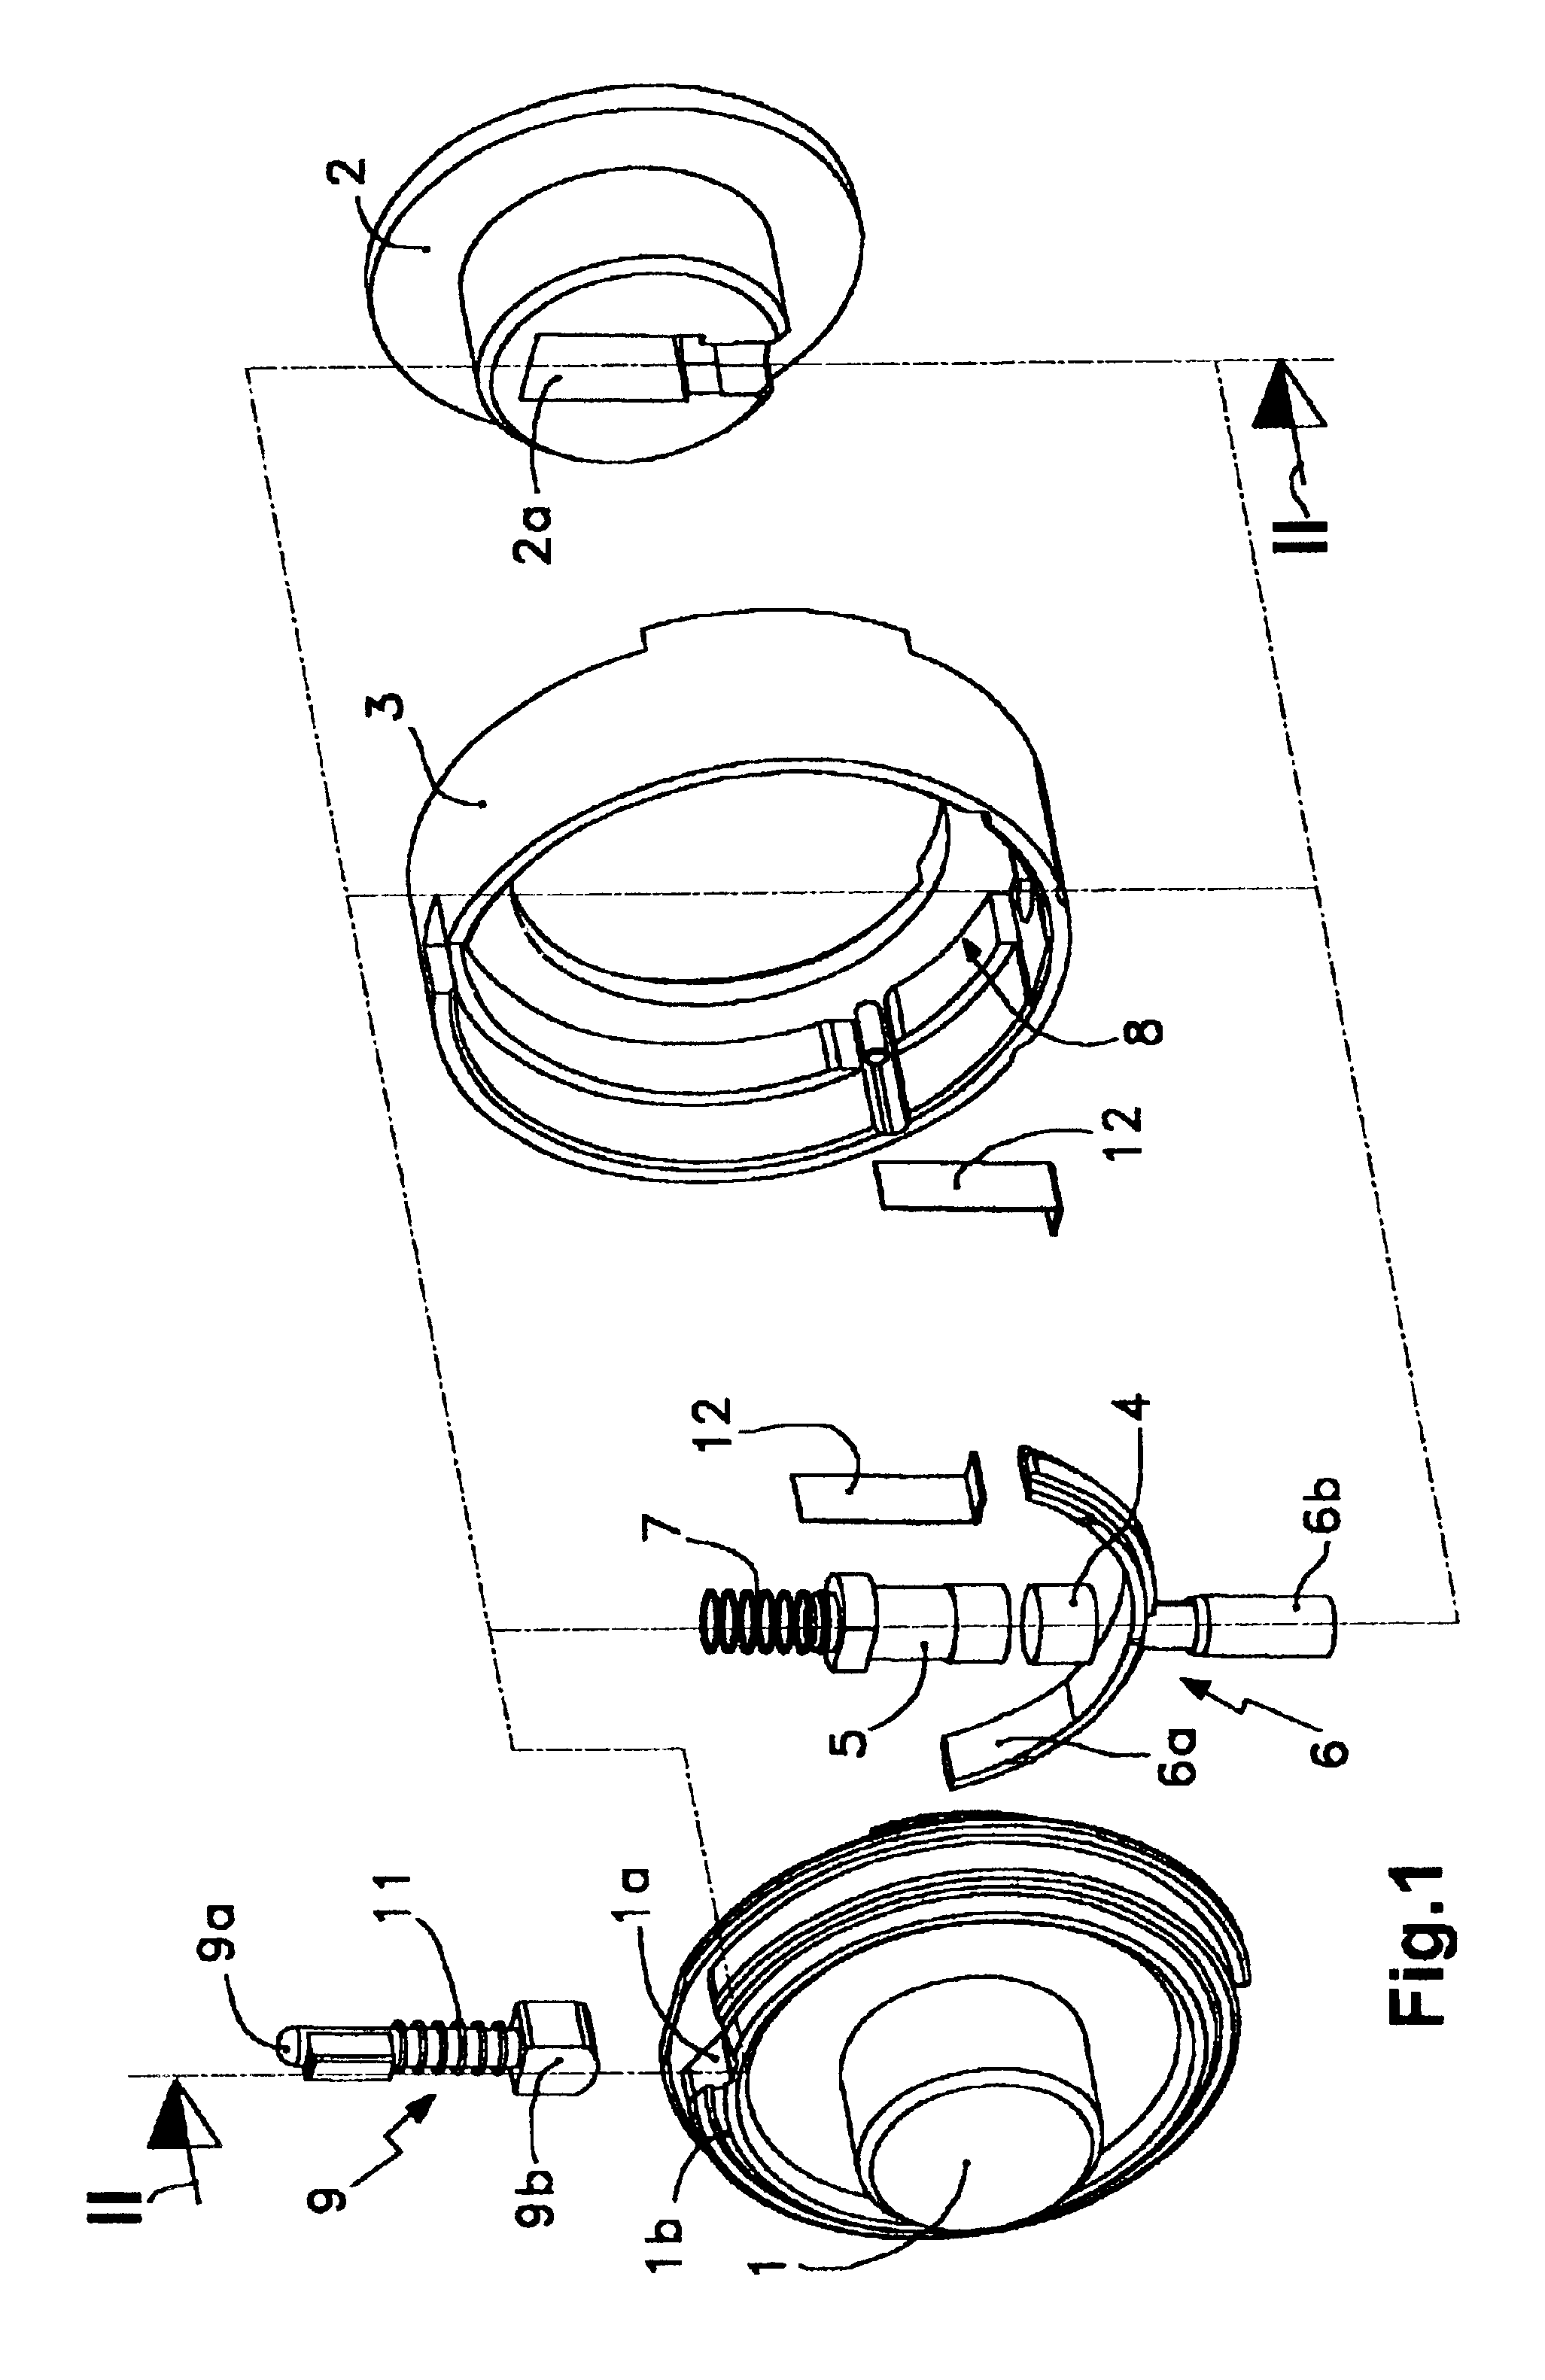 Clutch mechanism for locks